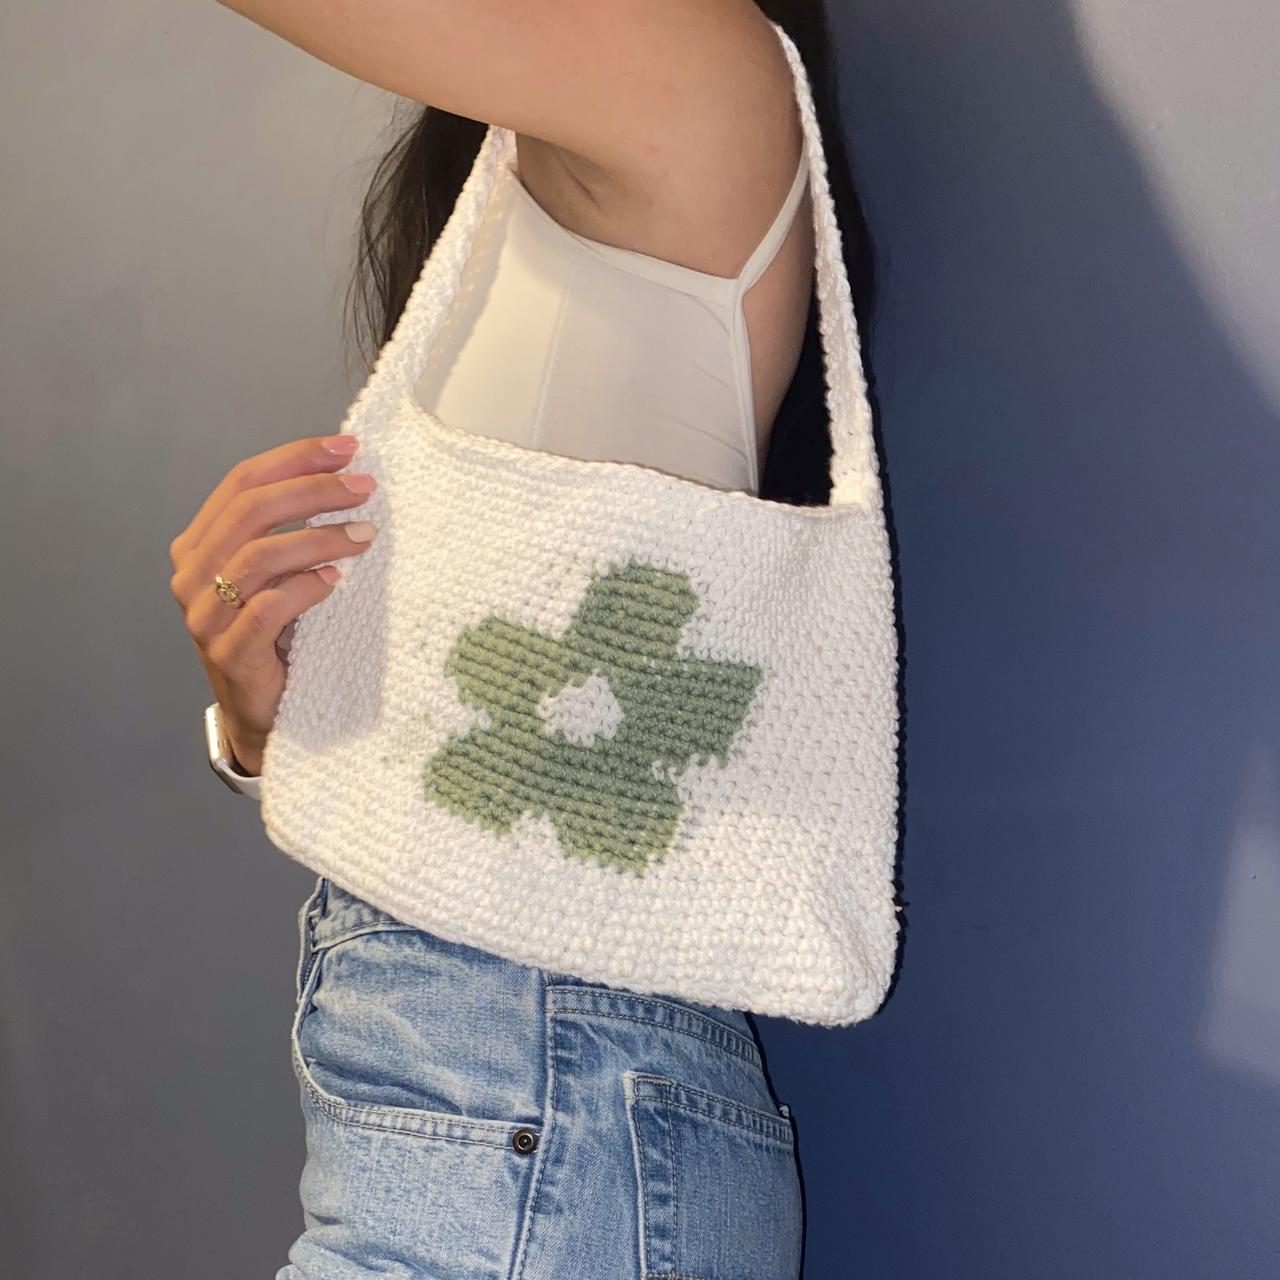 Women's White and Green Bag | Depop